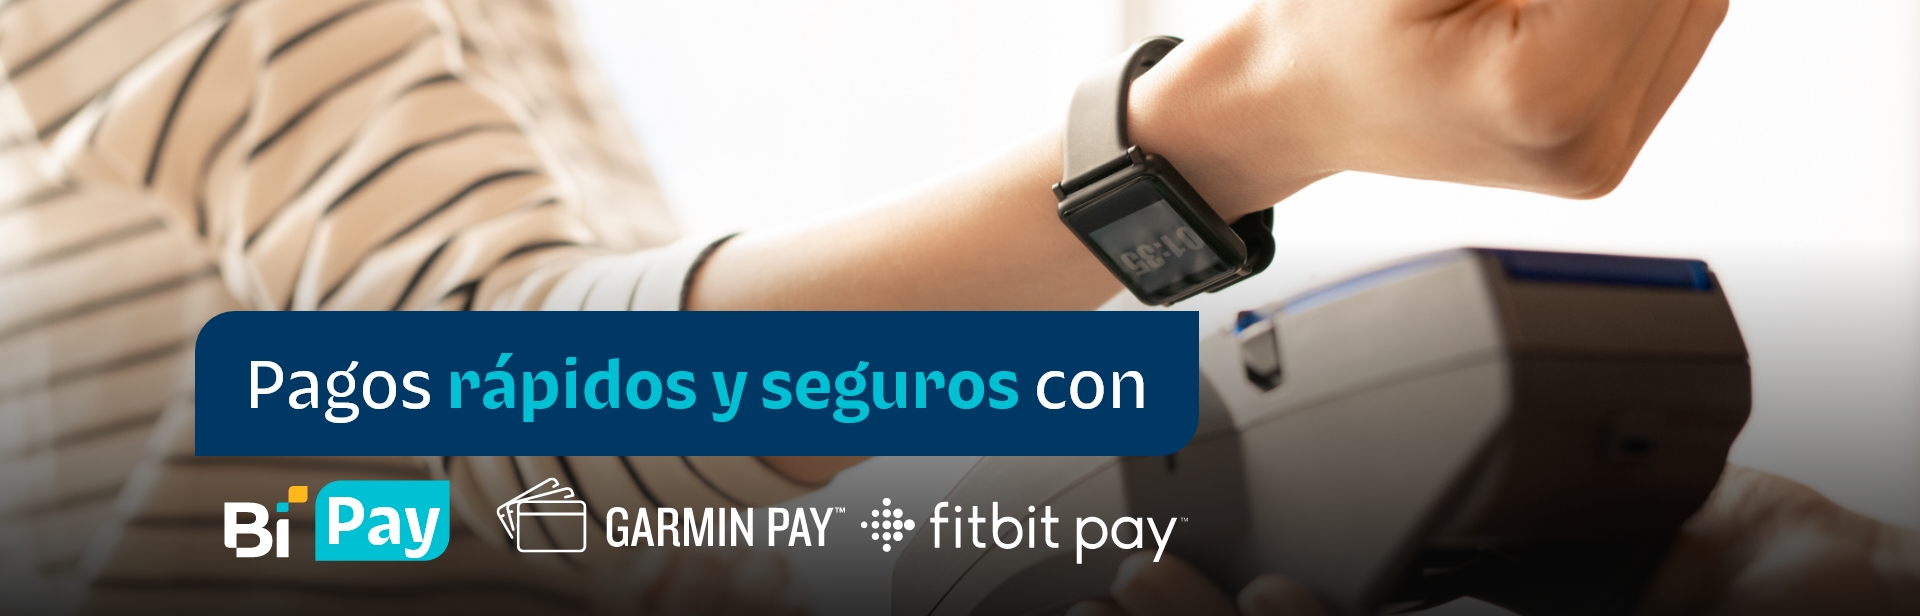 Beneficios de Tarjetas de Crédito Bi - Pagos Garmin Pay - Fitbit Pay